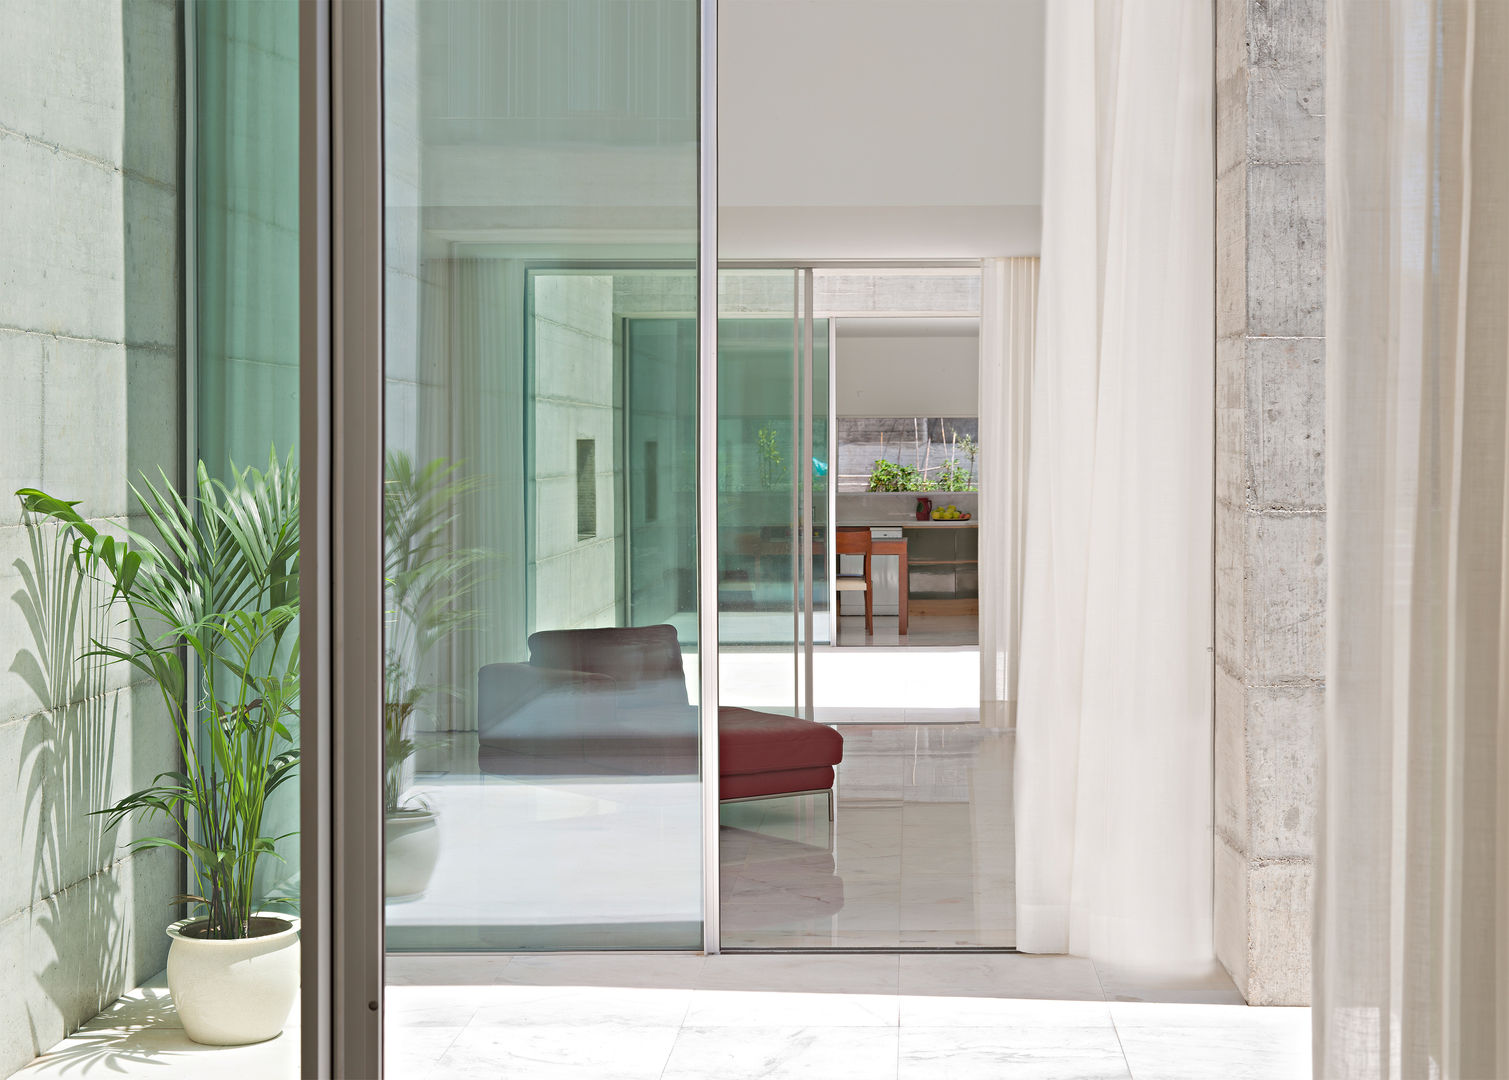 Casa em Moreira, Phyd Arquitectura Phyd Arquitectura Minimalistyczne okna i drzwi